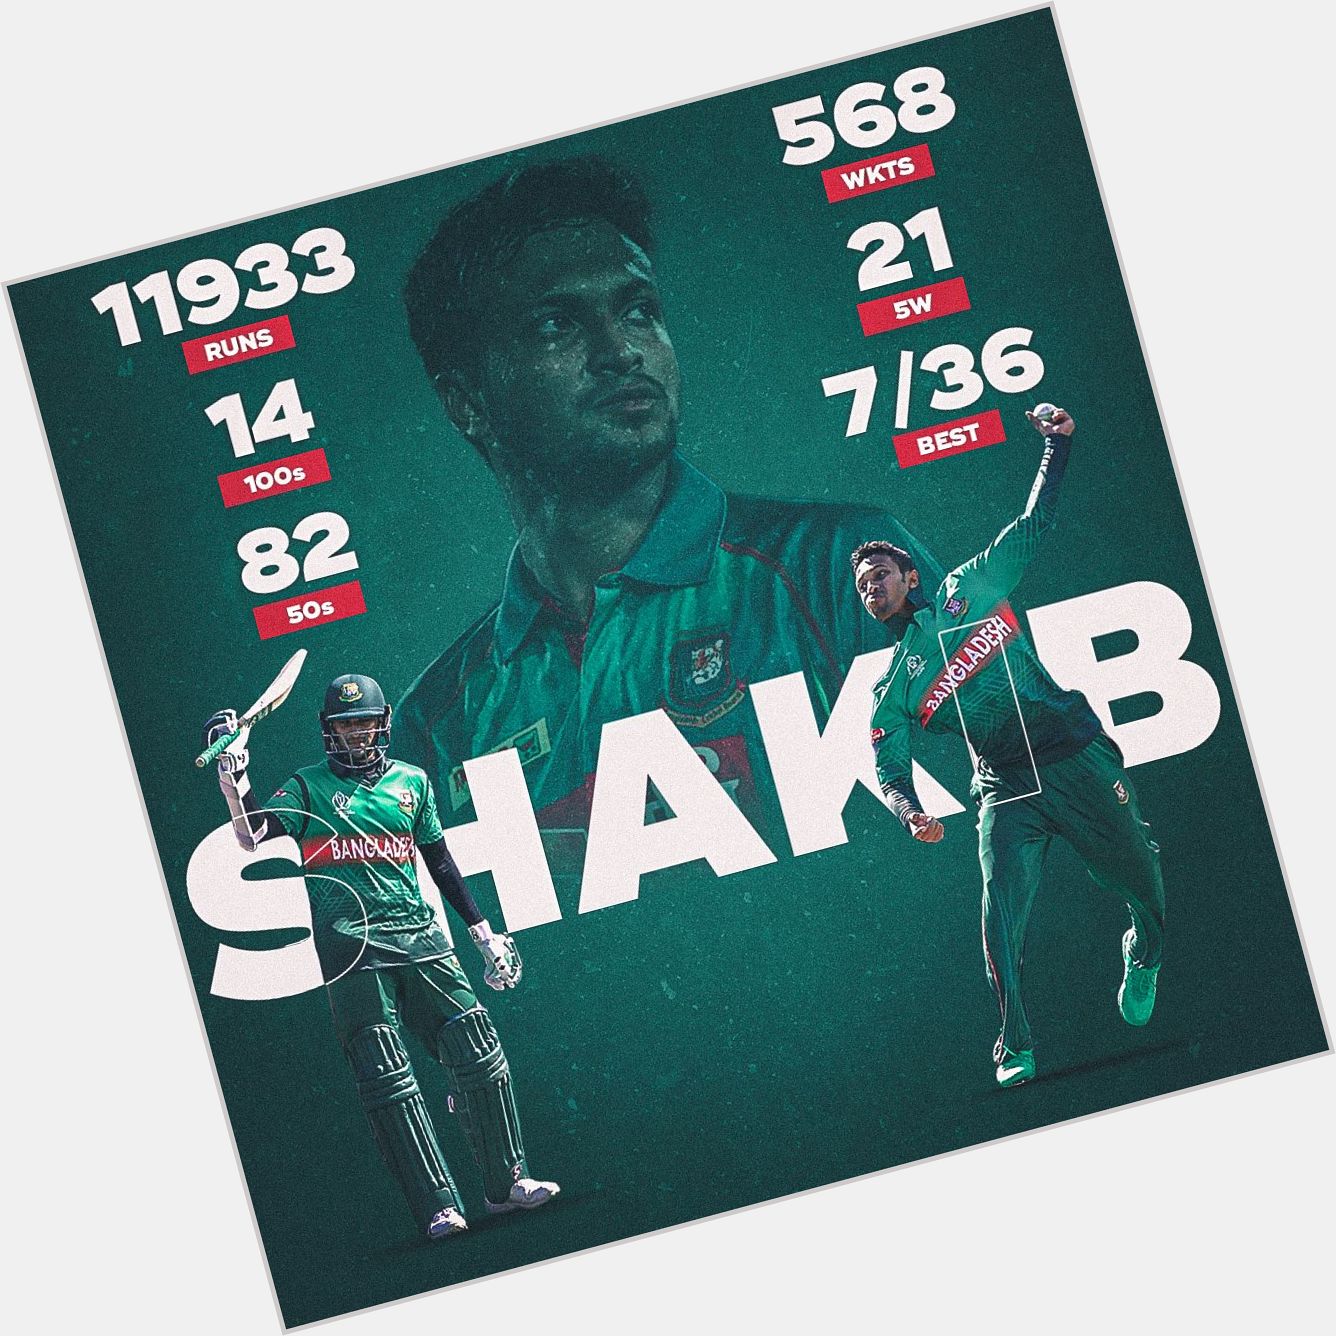 Happy birthday to Poster Boy of Bangladesh Cricket, Shakib Al Hasan! 